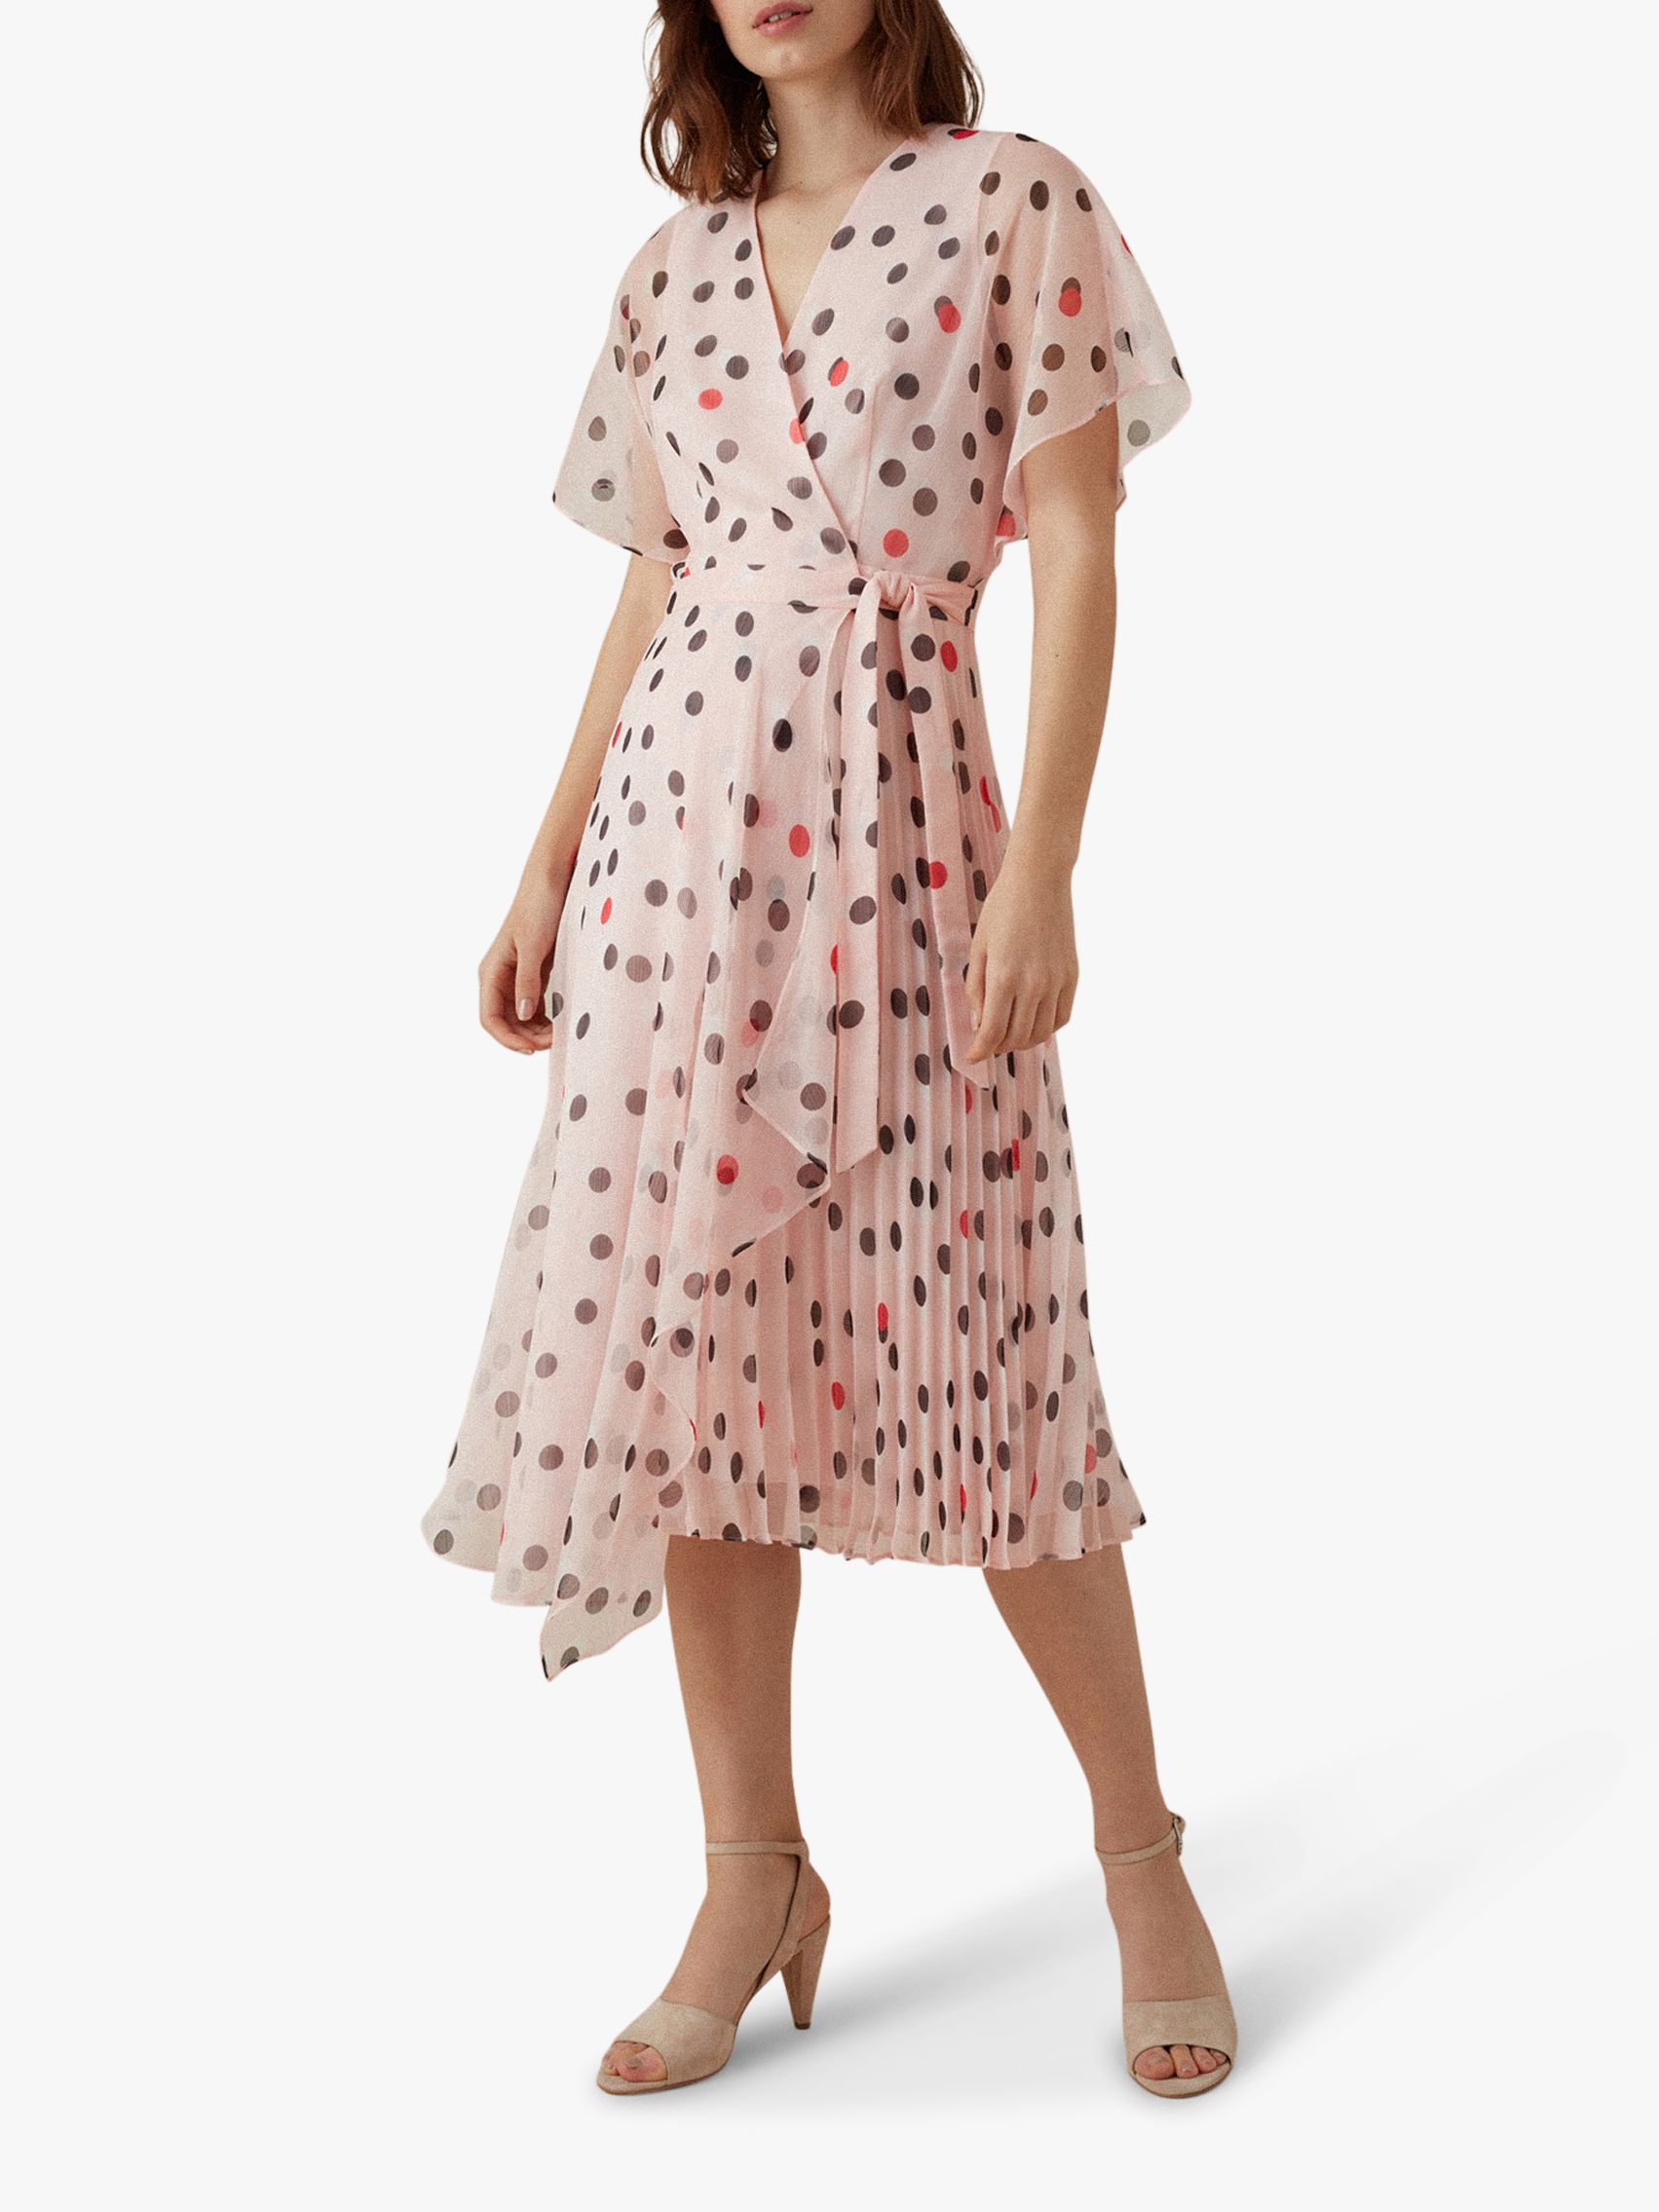 Karen Millen Polka Dot Dress, Pink/Multi